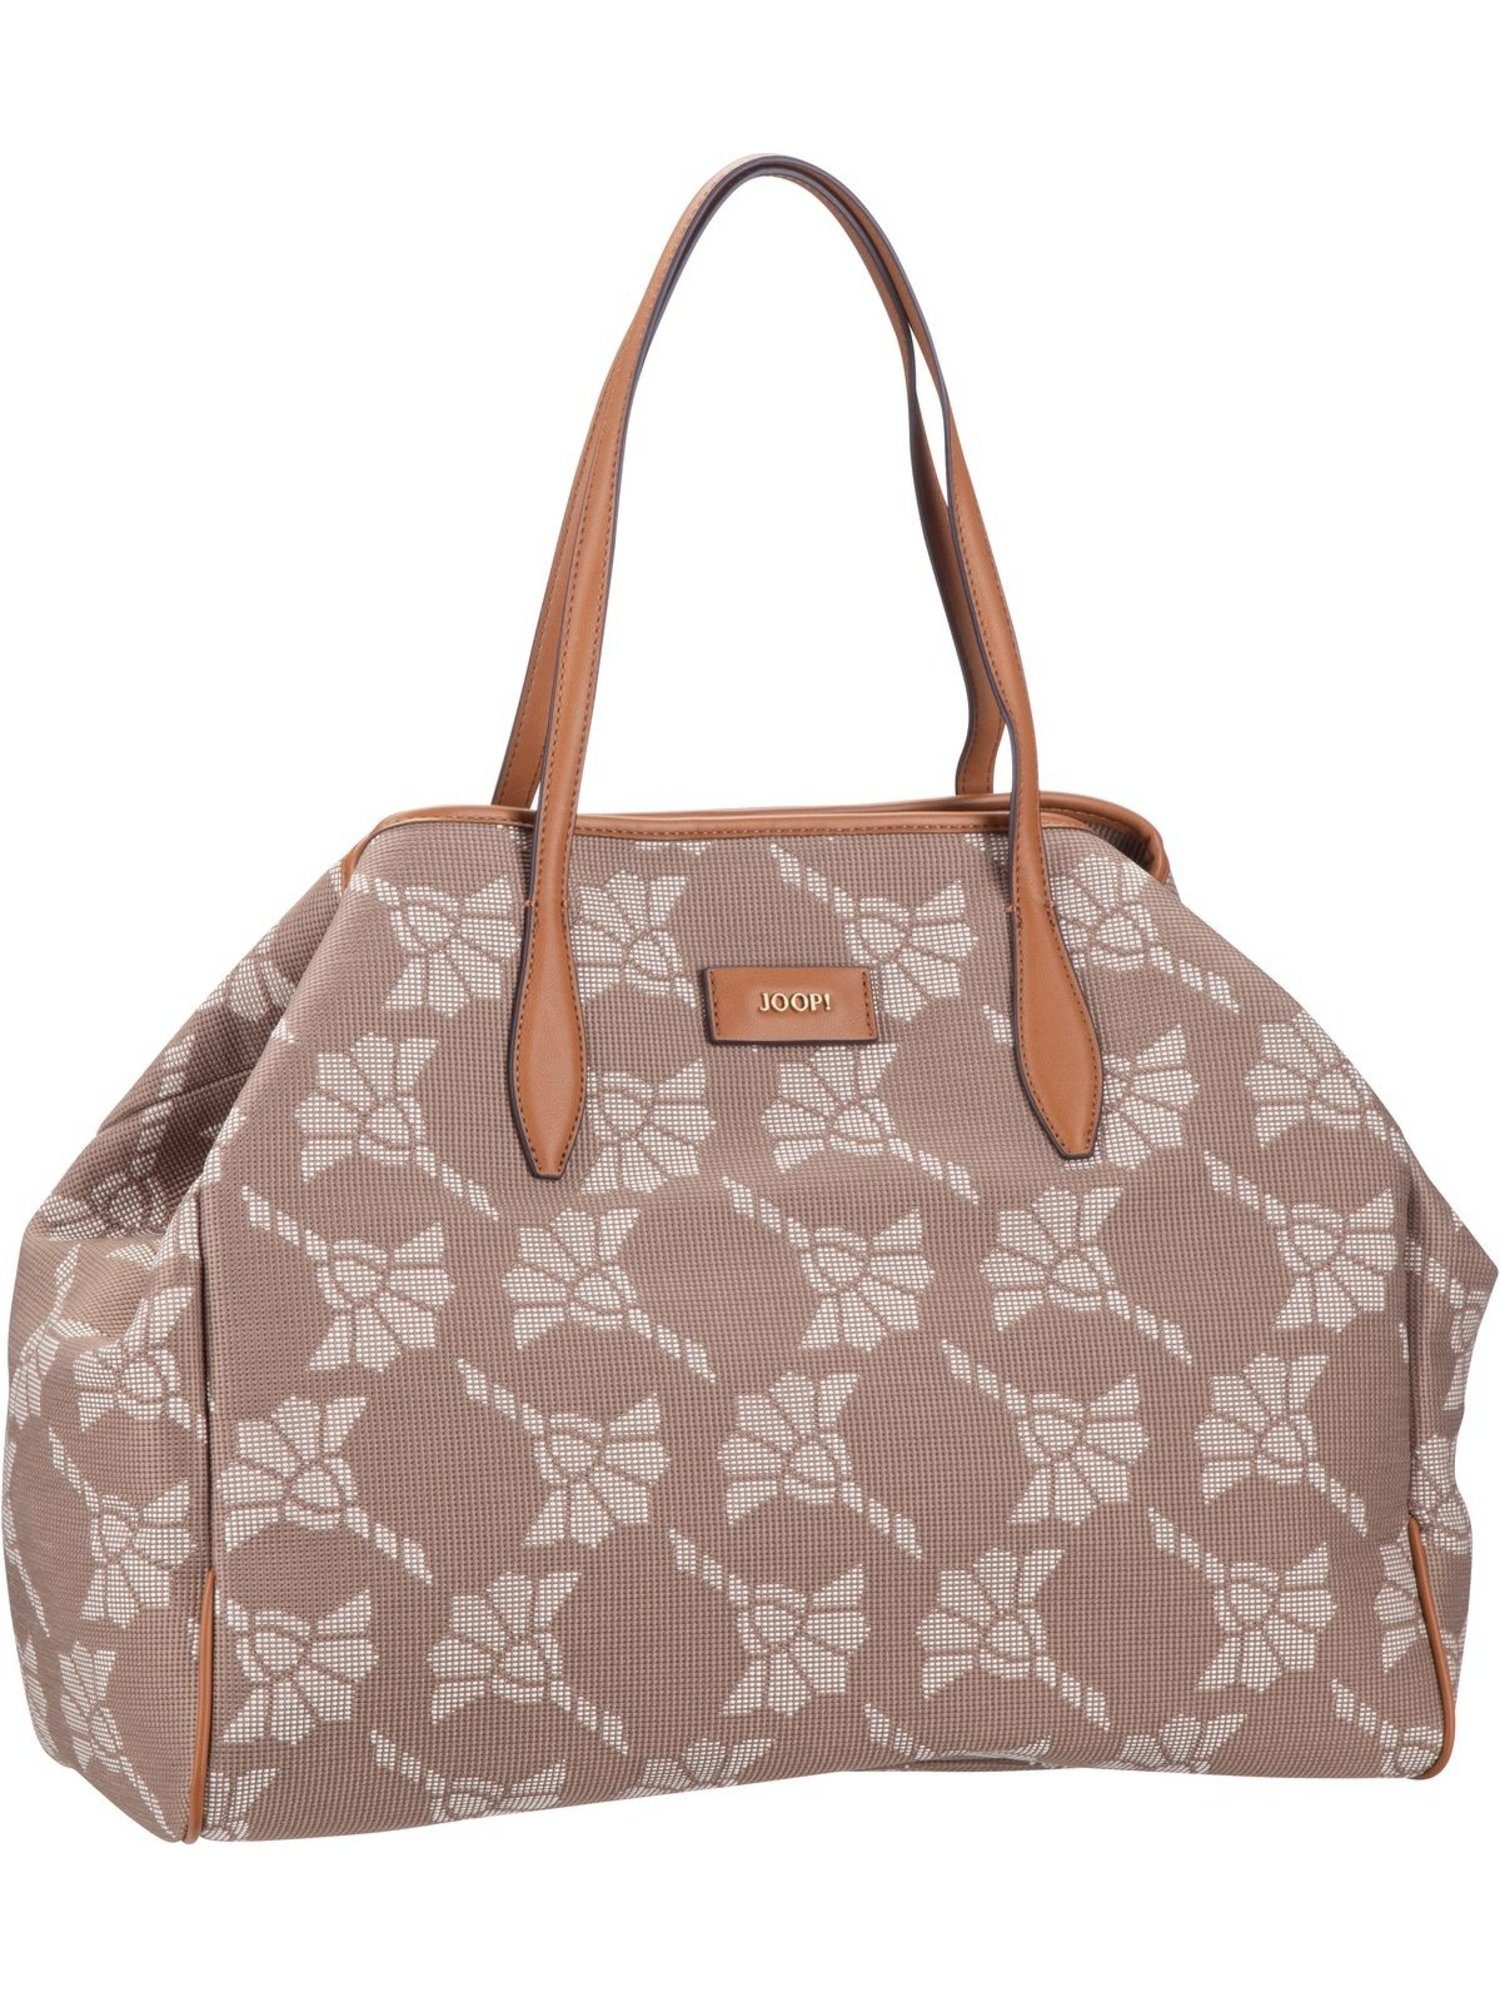 Joop! Handtasche »Secondo Anela Shopper XLHO«, Shopper online kaufen | OTTO